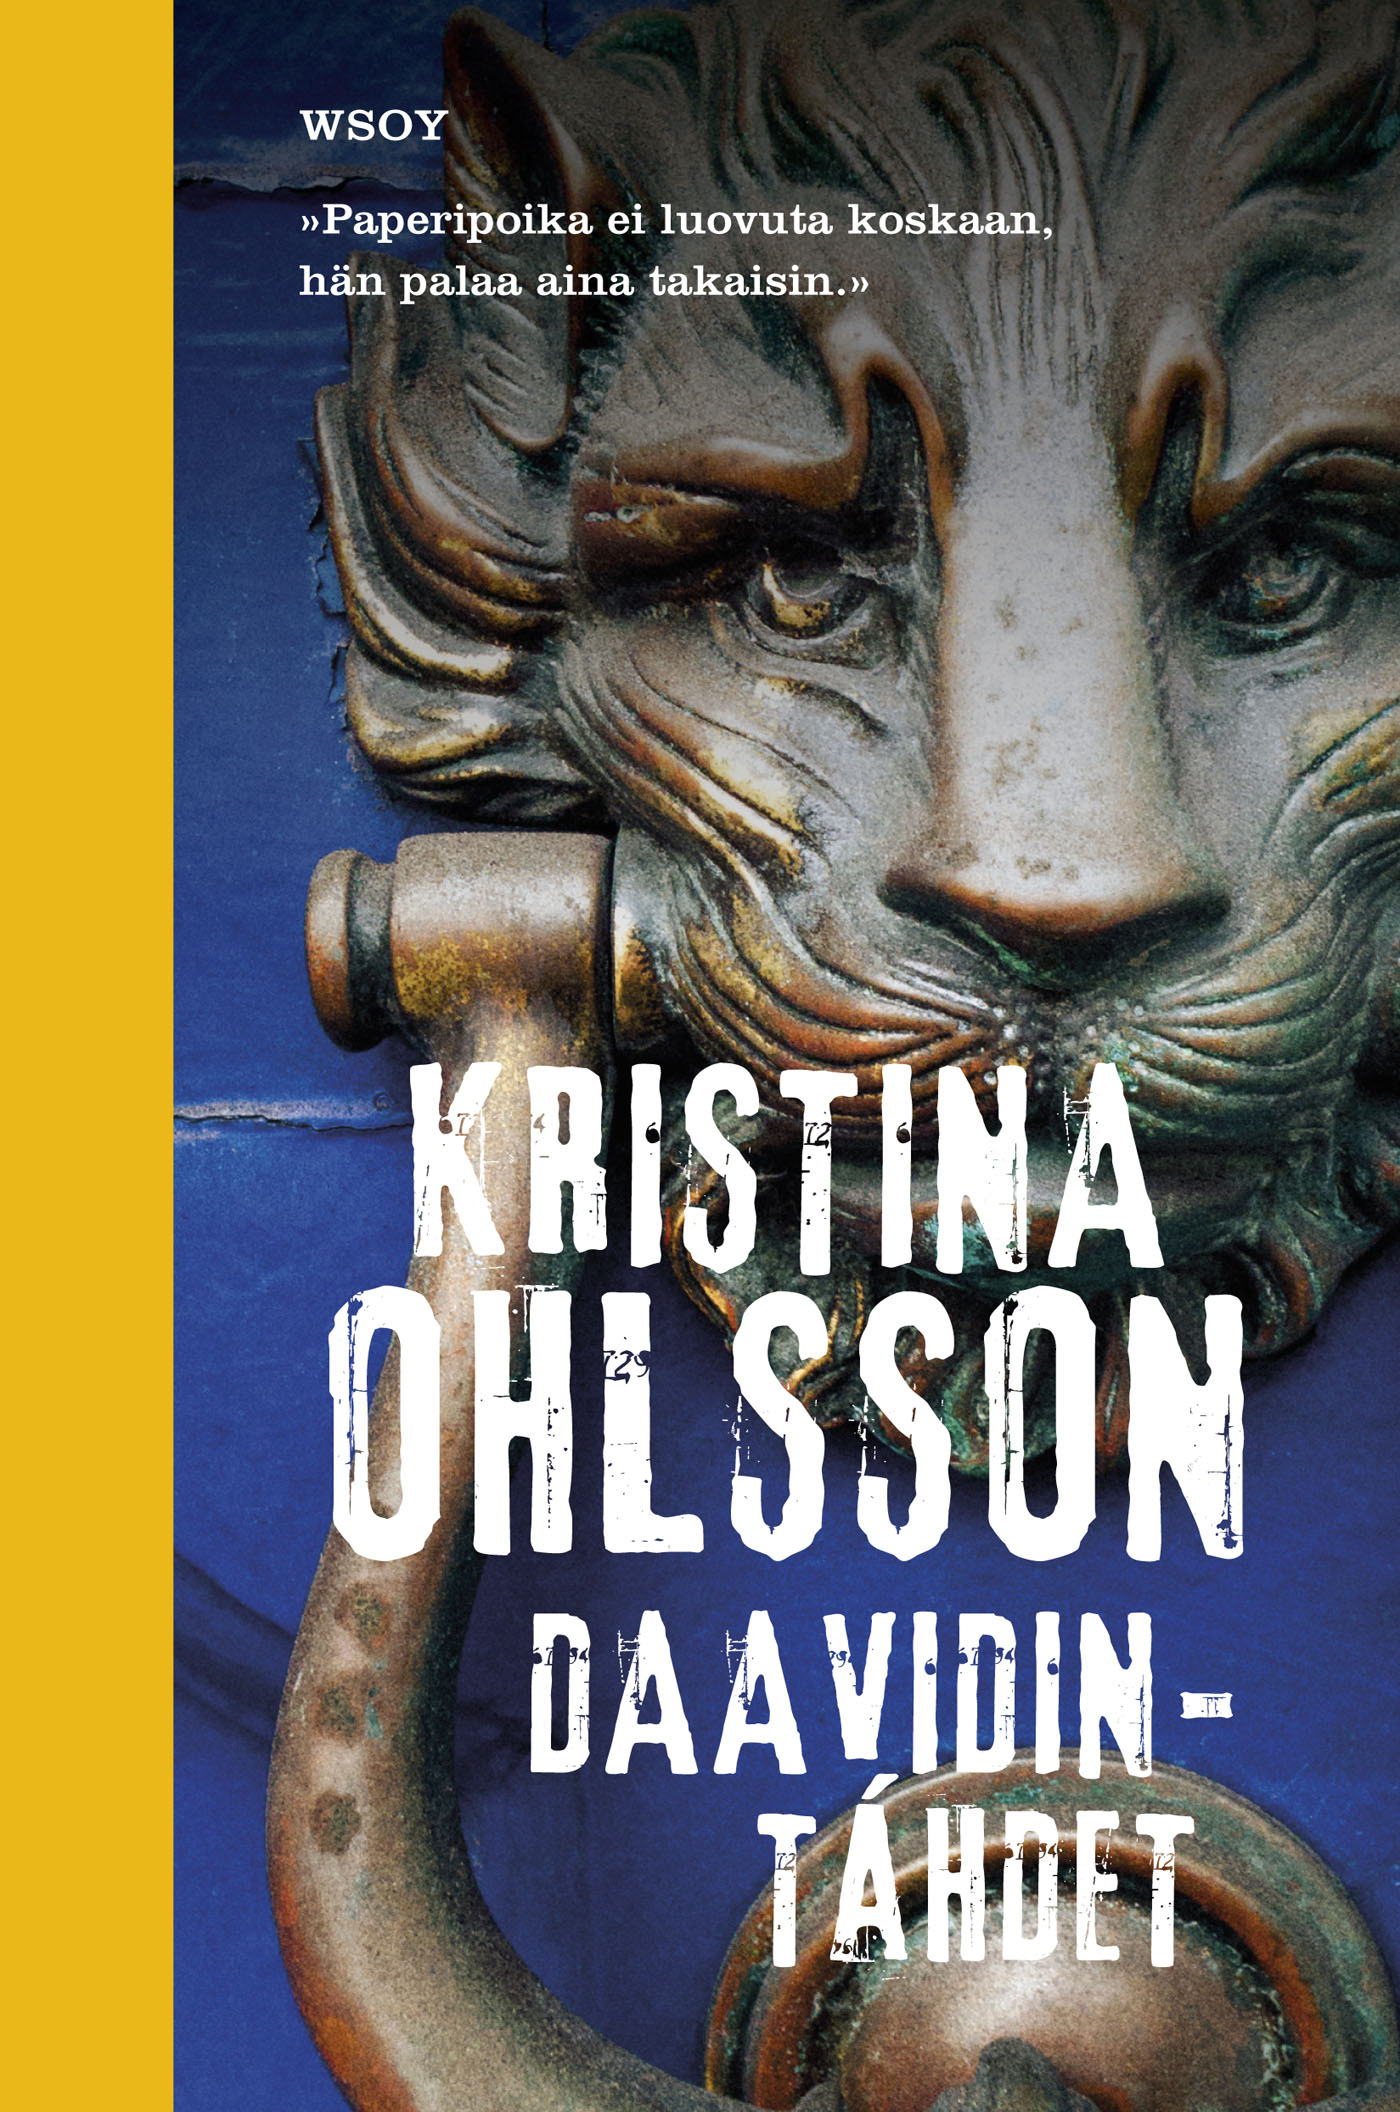 Ohlsson, Kristina - Daavidintähdet, e-kirja